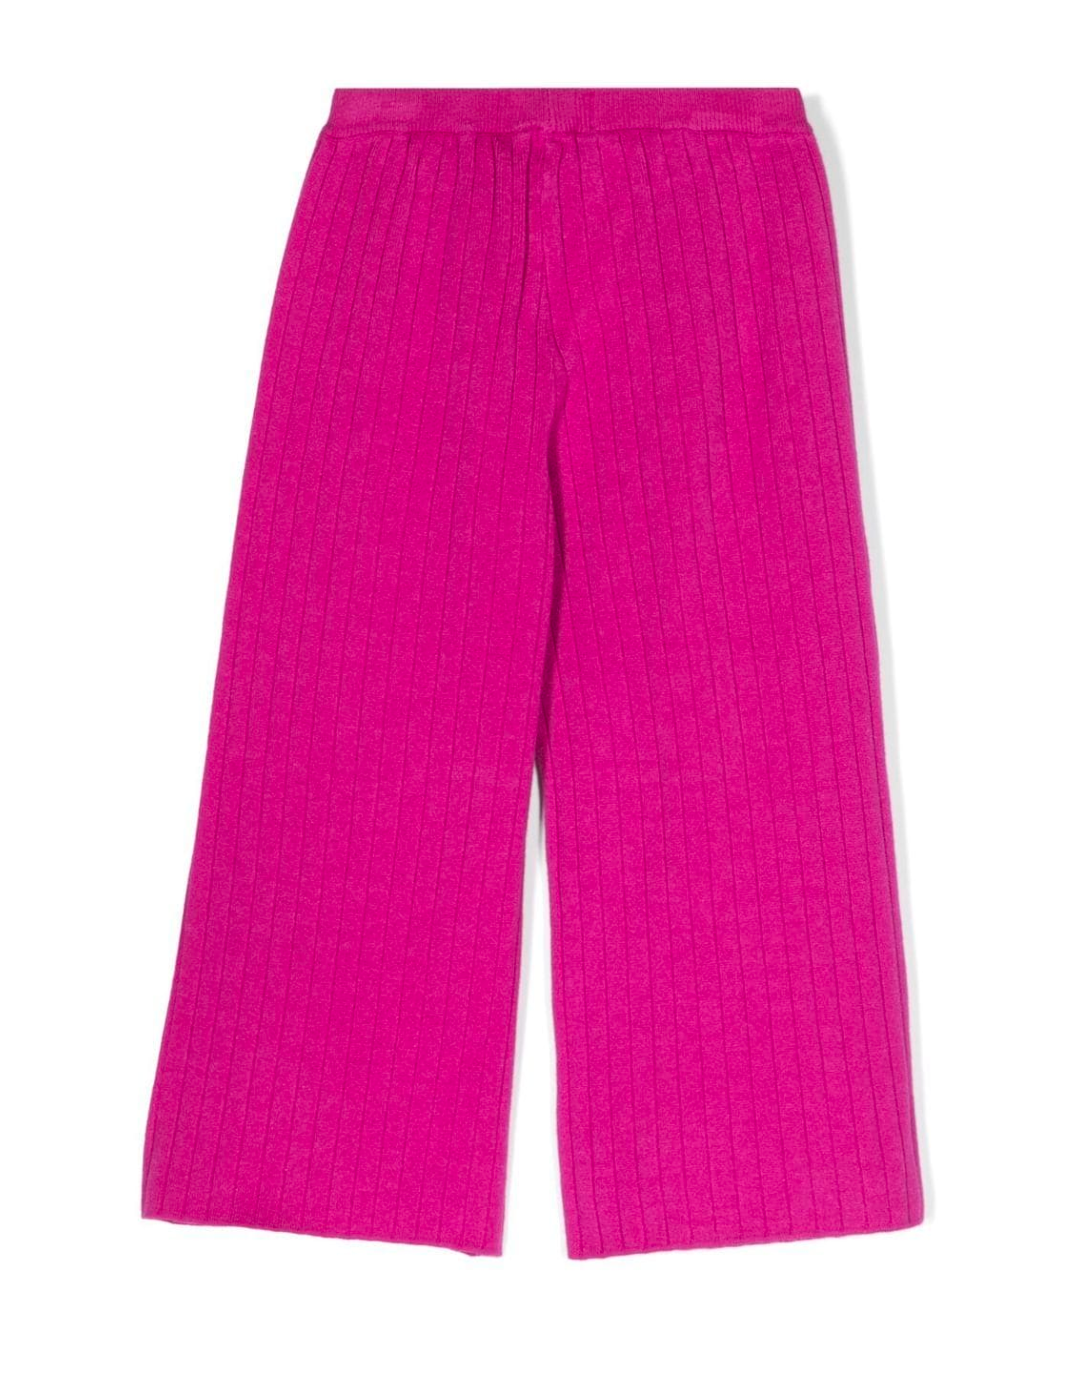 BOBO CHOSES - Pantalon en maille à coupe ample rose fushia - 8/9 ans